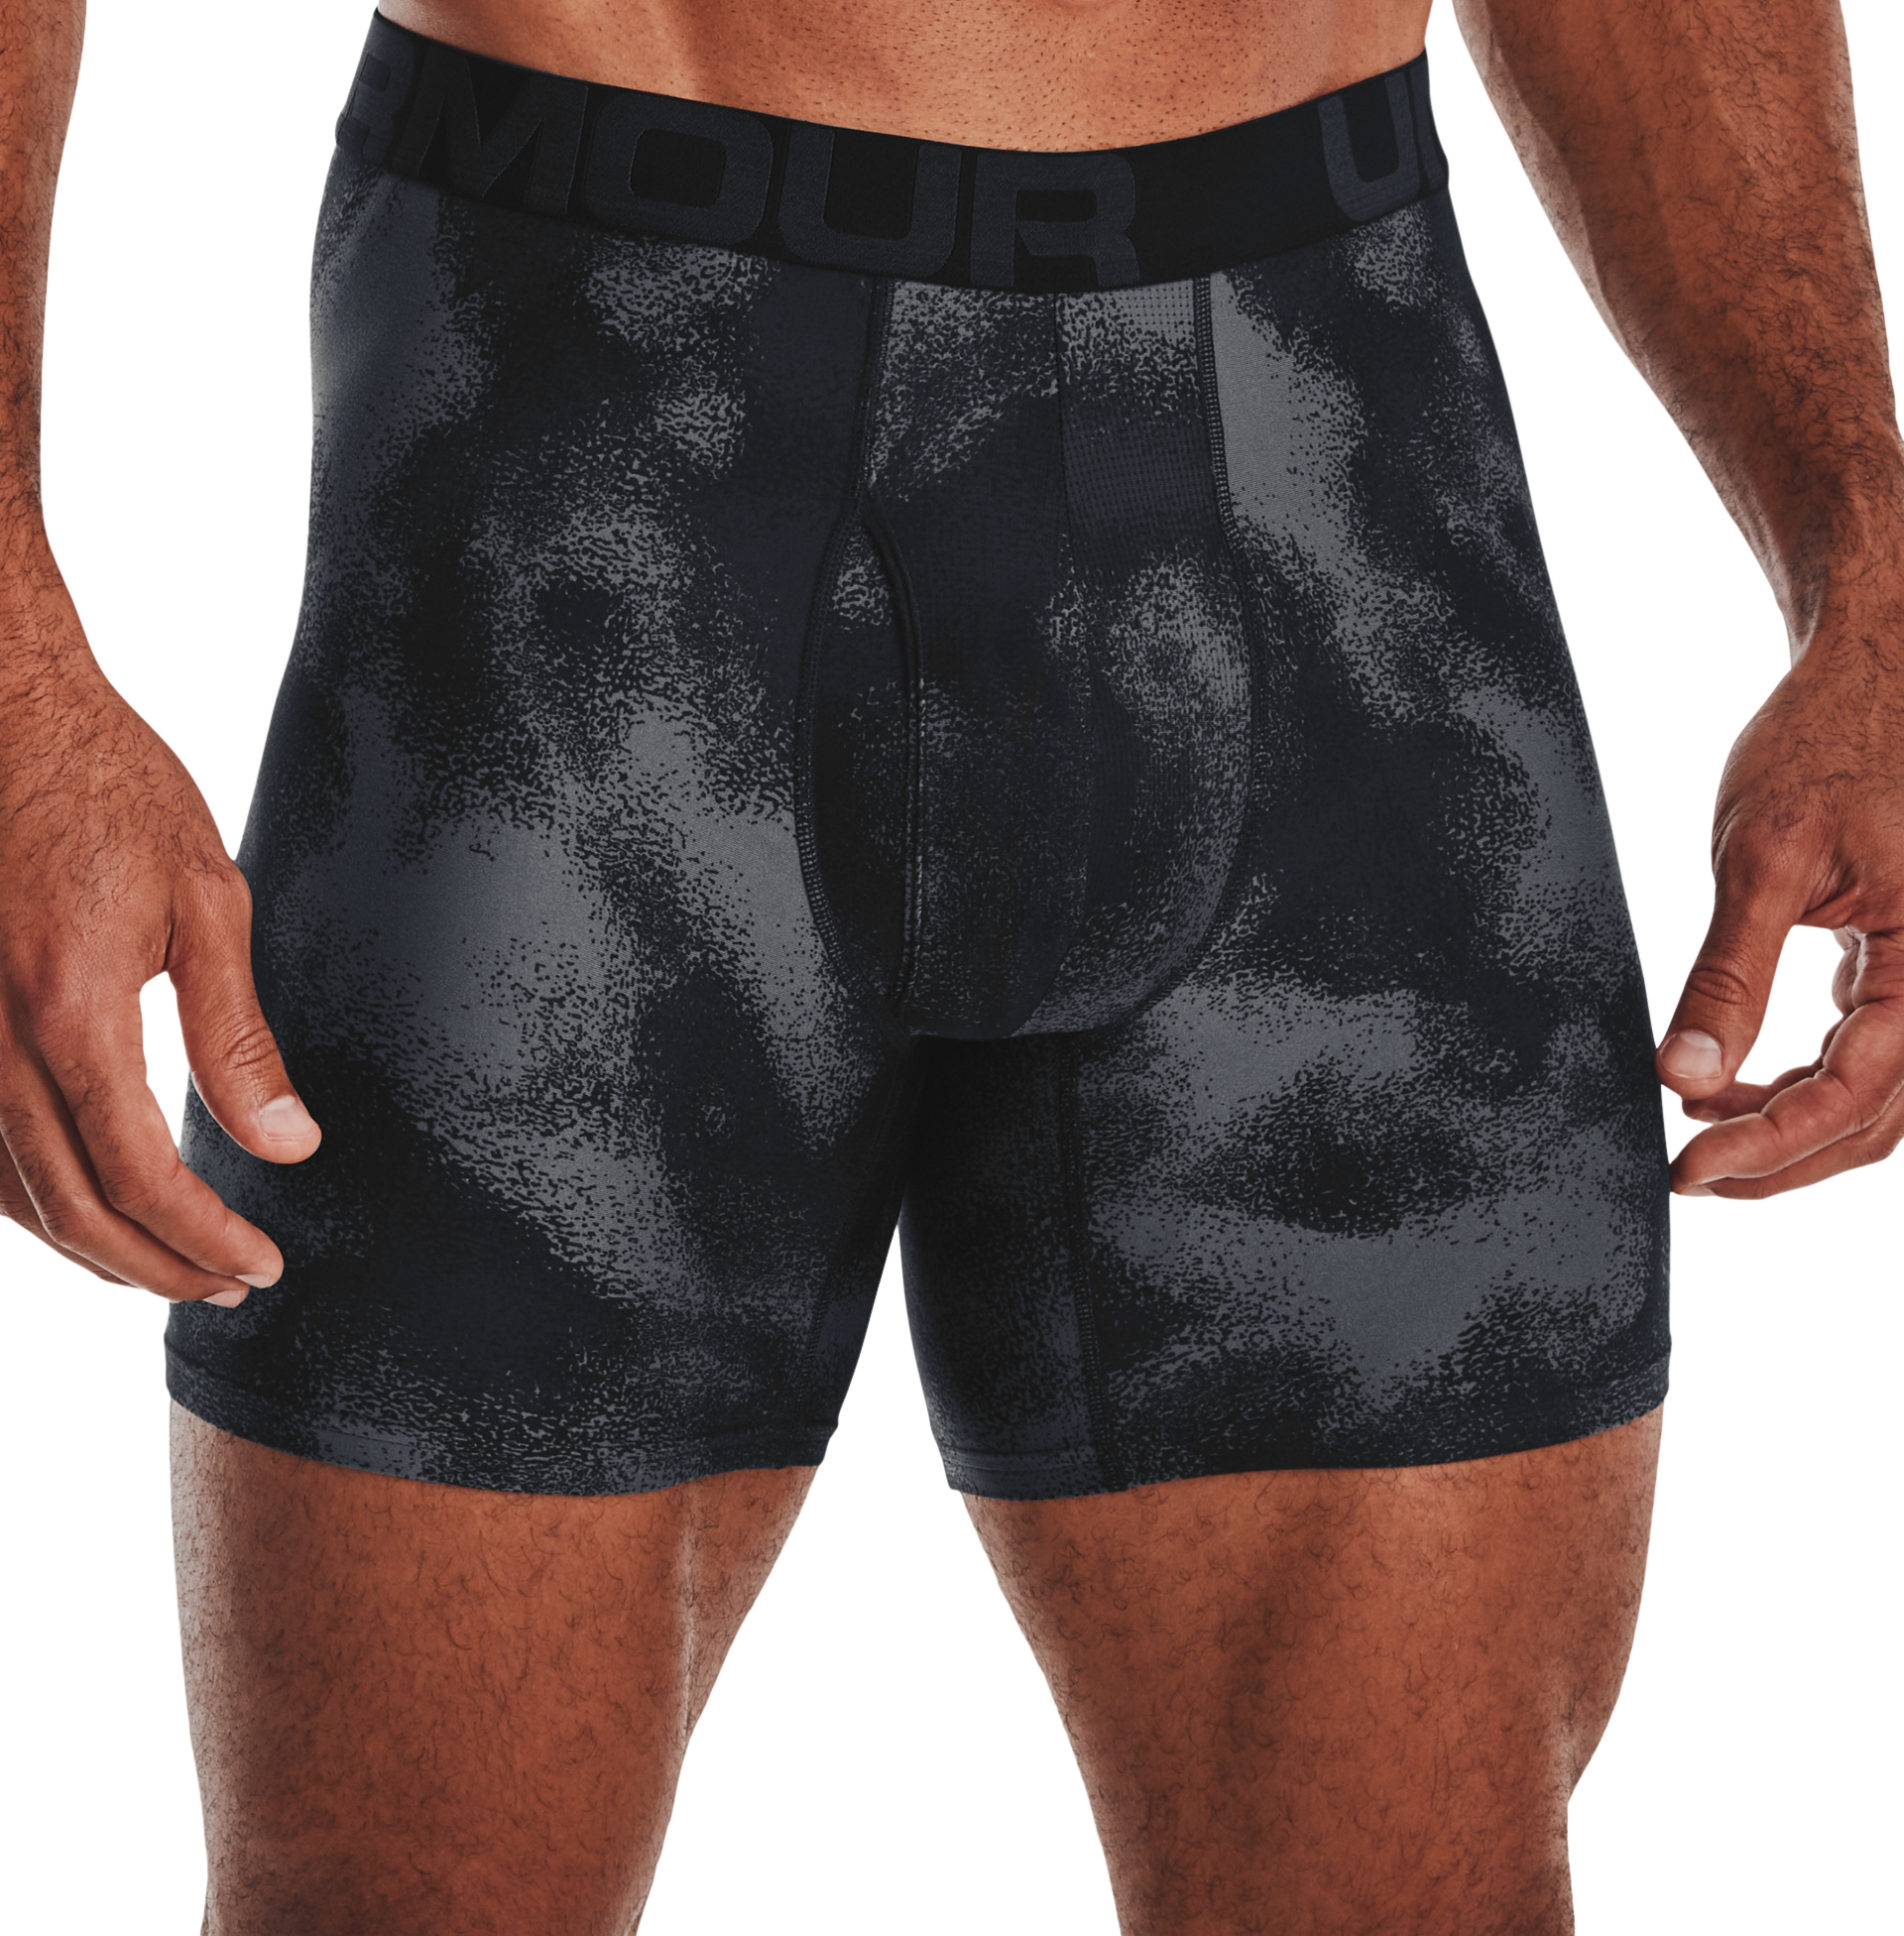 Under Armour Tech 6"" Patterned Boxerjock Shorts for Men - Pitch Gray/Jet Gray-22 -  L